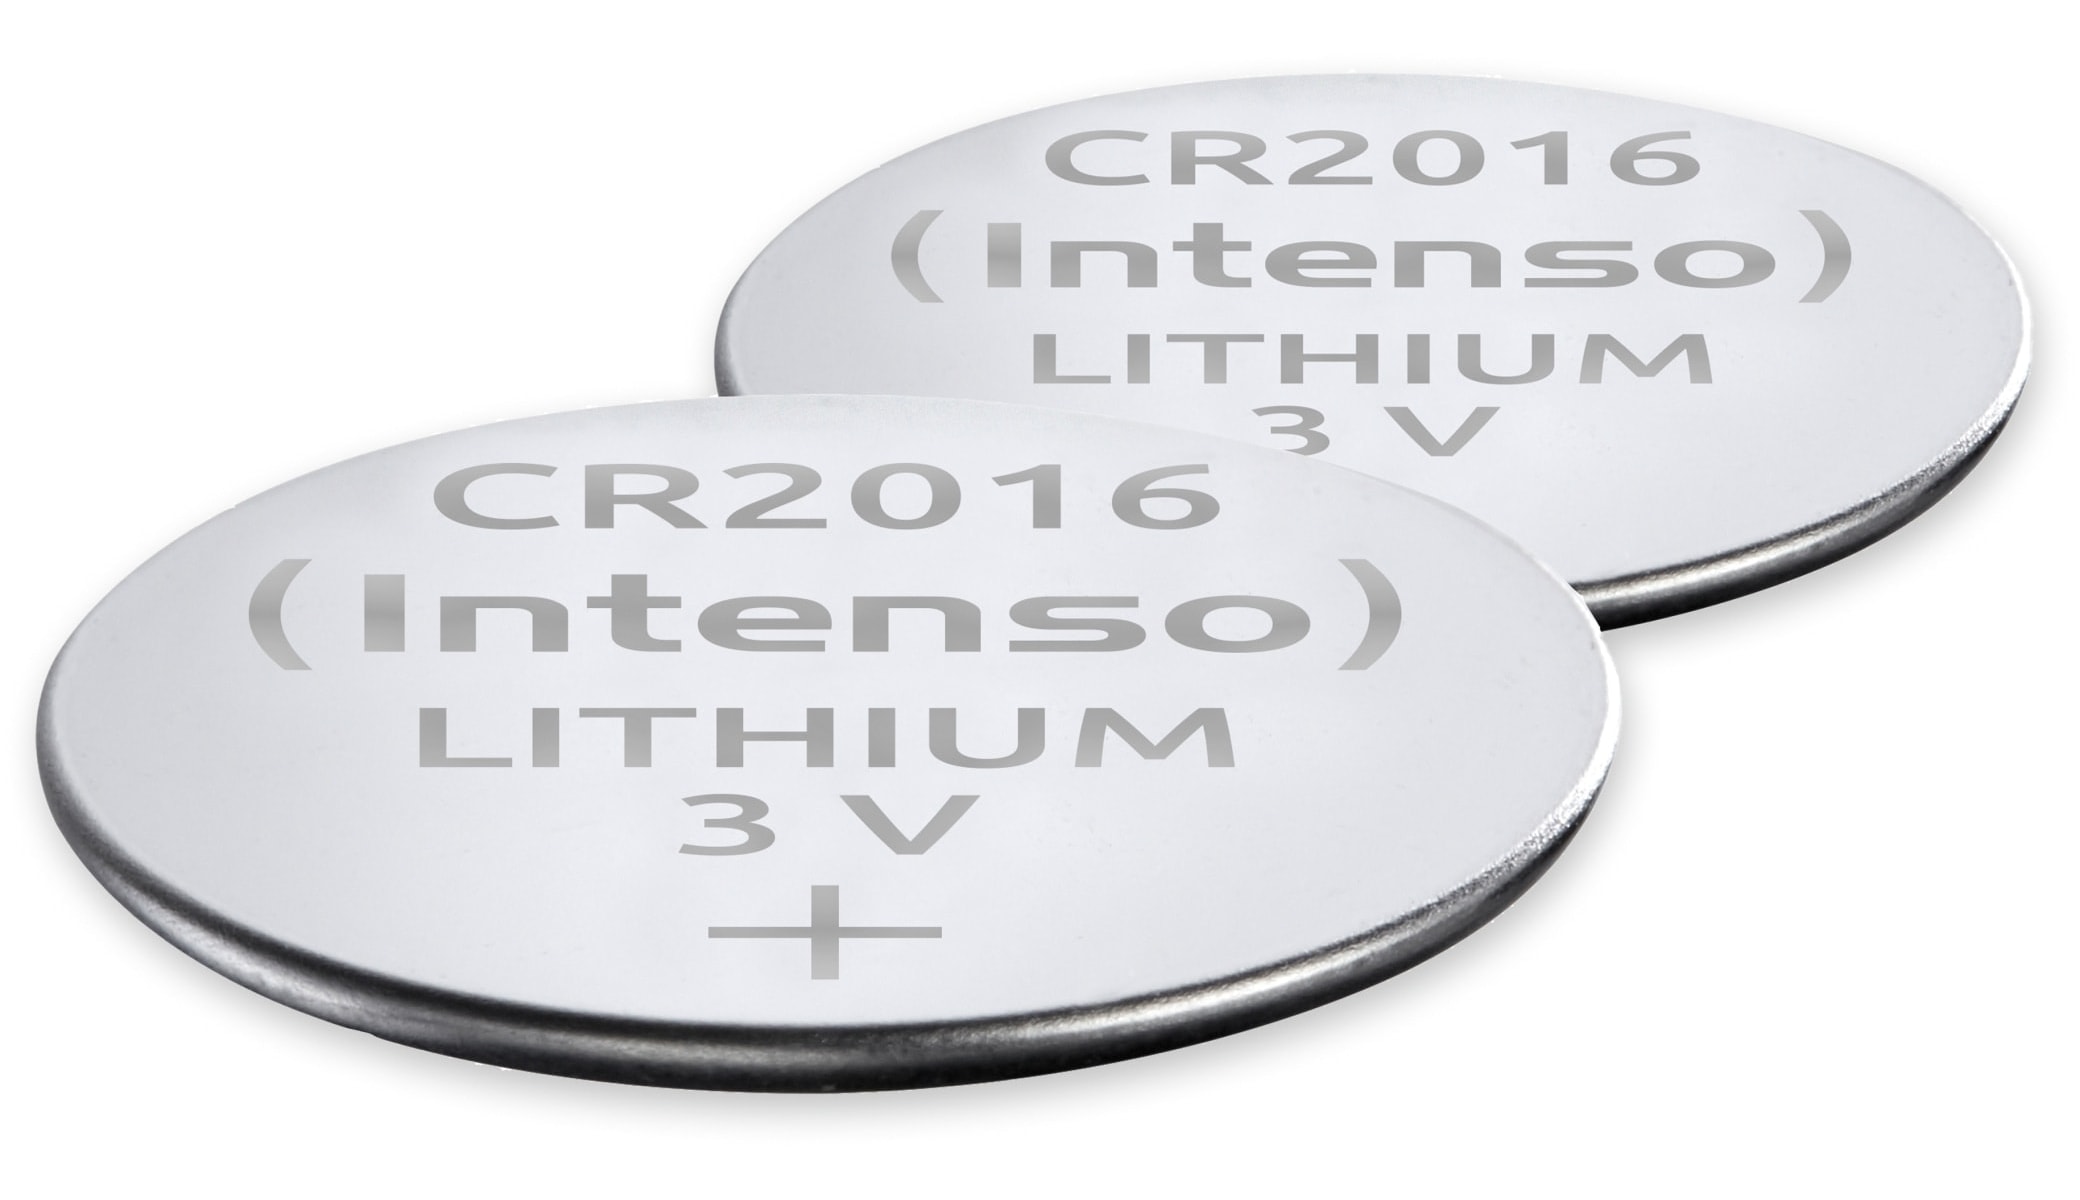 INTENSO Lithium-Knopfzelle CR2016, 2 Stück